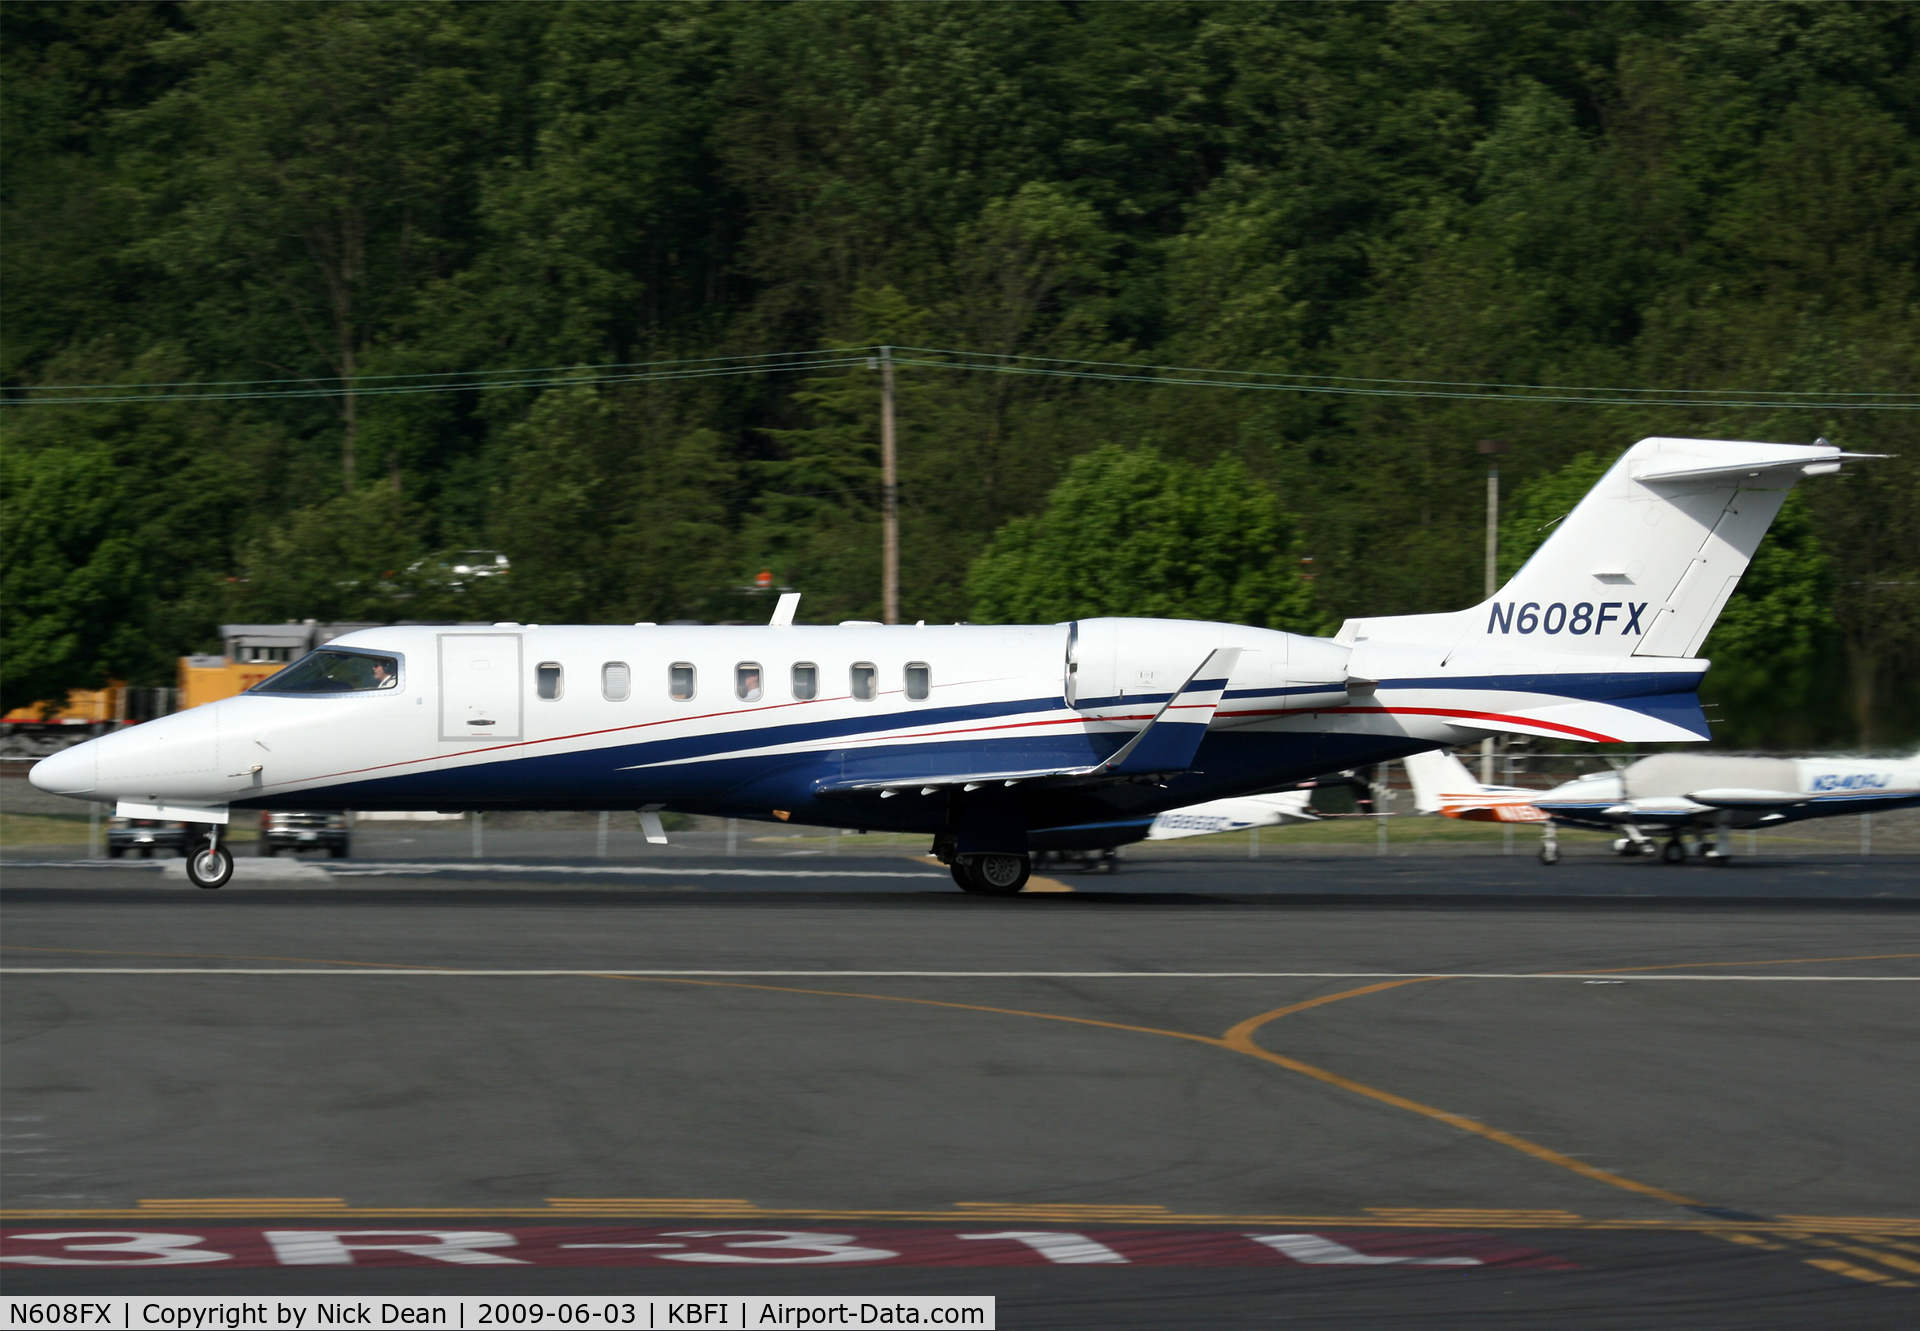 N608FX, 2004 Learjet Inc 45 C/N 2014, KBFI